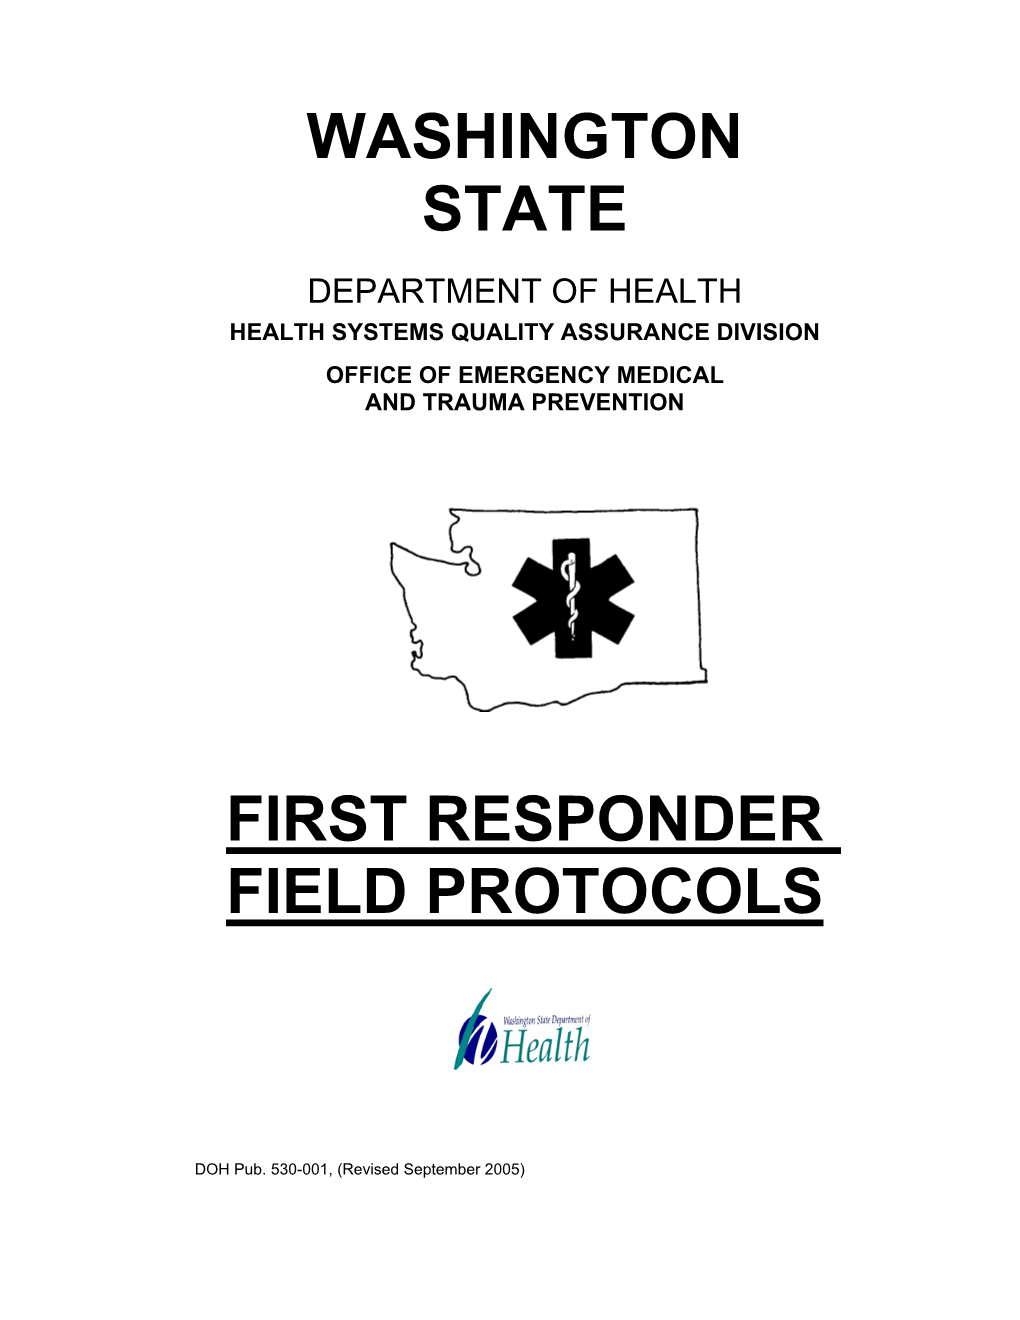 Washington State First Responder (EMR) Field Protocols